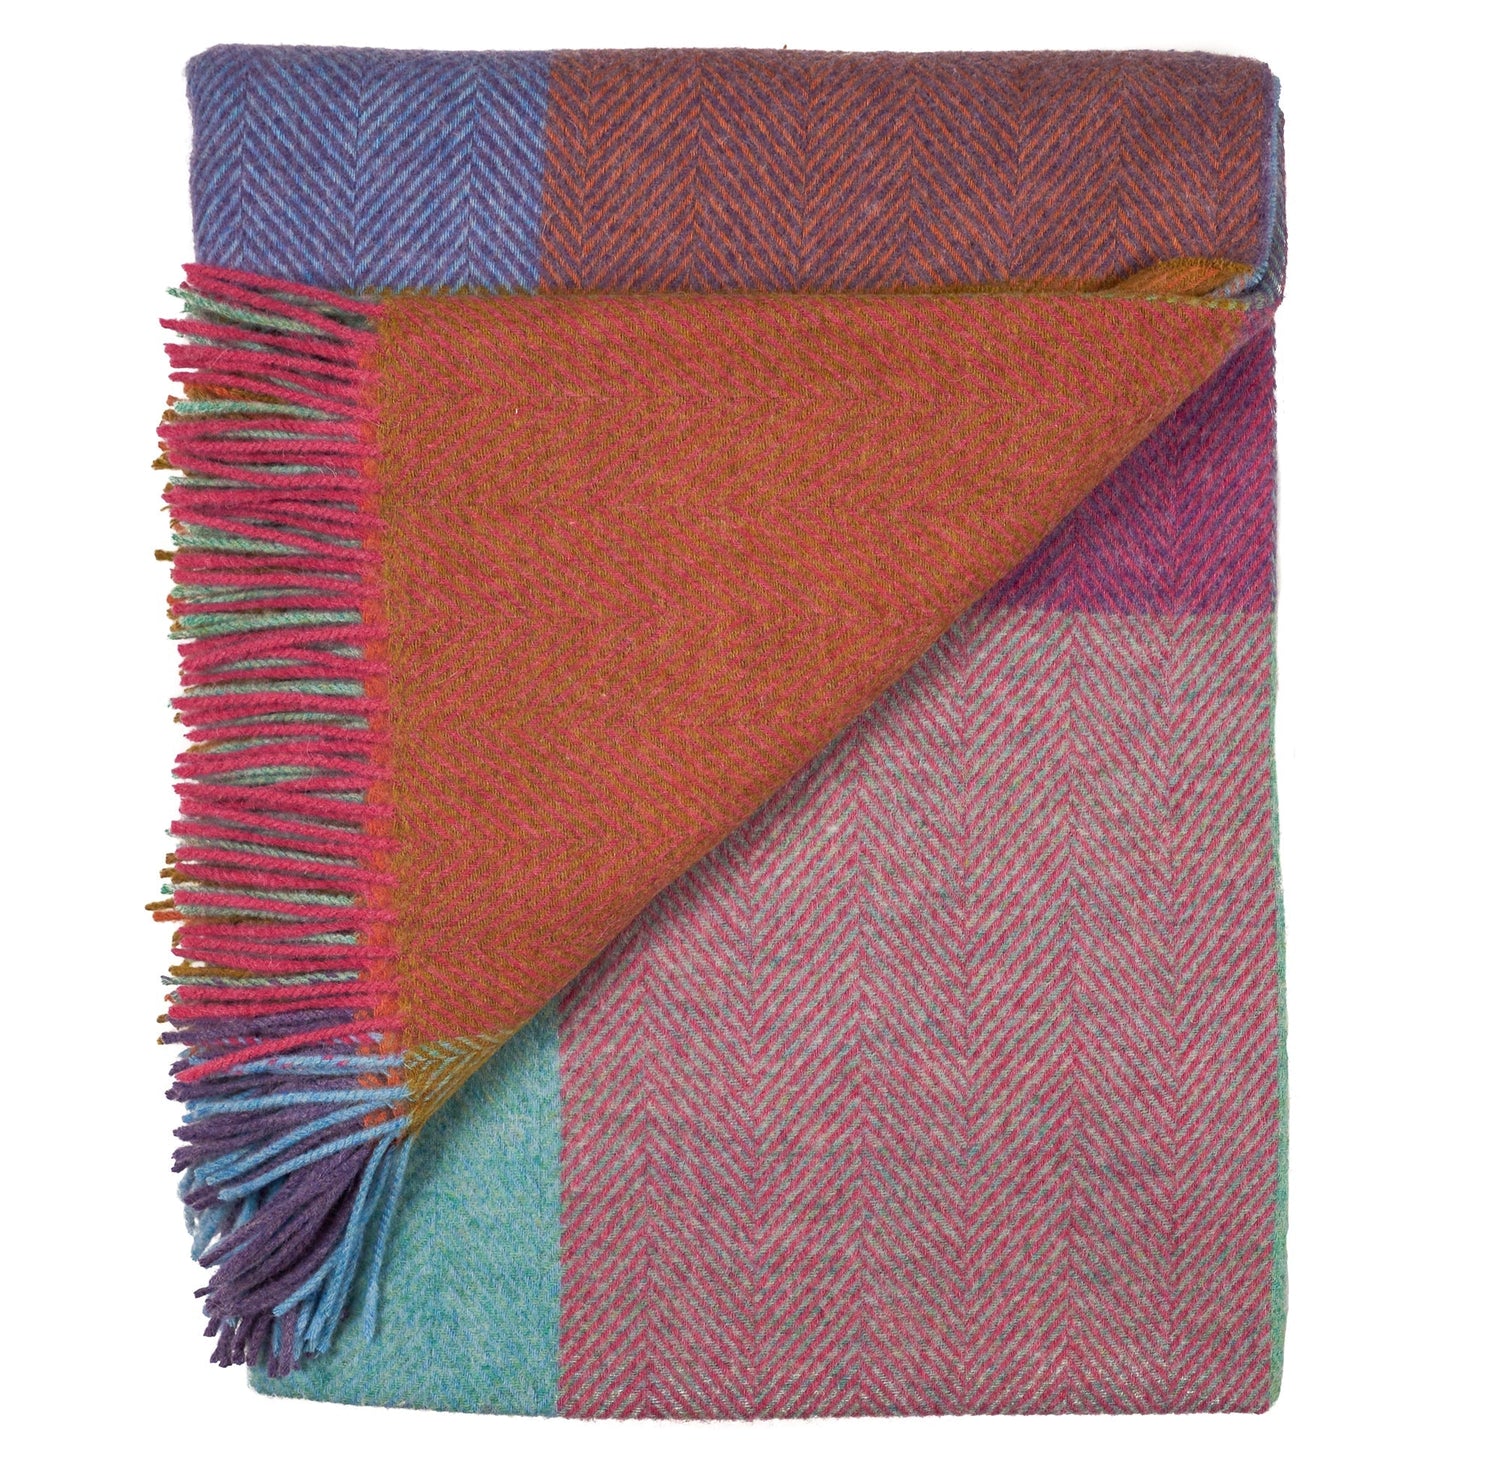 Southampton Home Merino Wool Geometric Block Throw (Kaleidoscope)-Throws and Blankets-810032753108-KaleidoscopeBlock-Prince of Scots